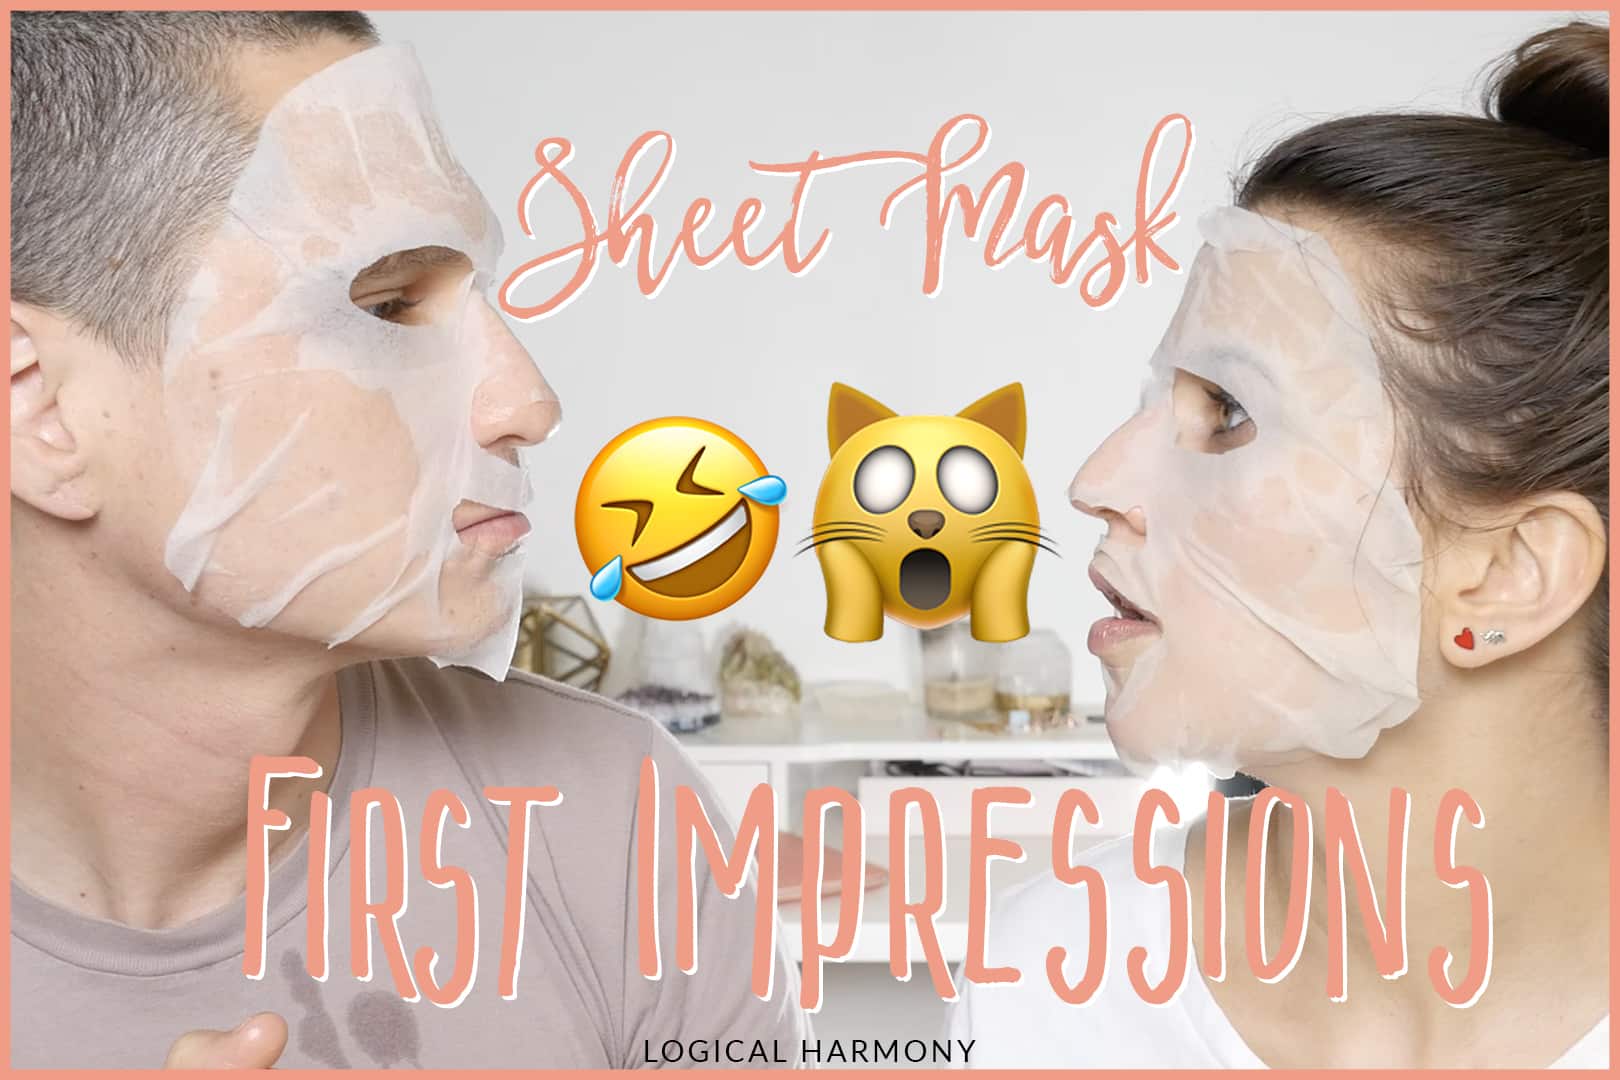 Andalou Naturals Sheet Mask First Impressions